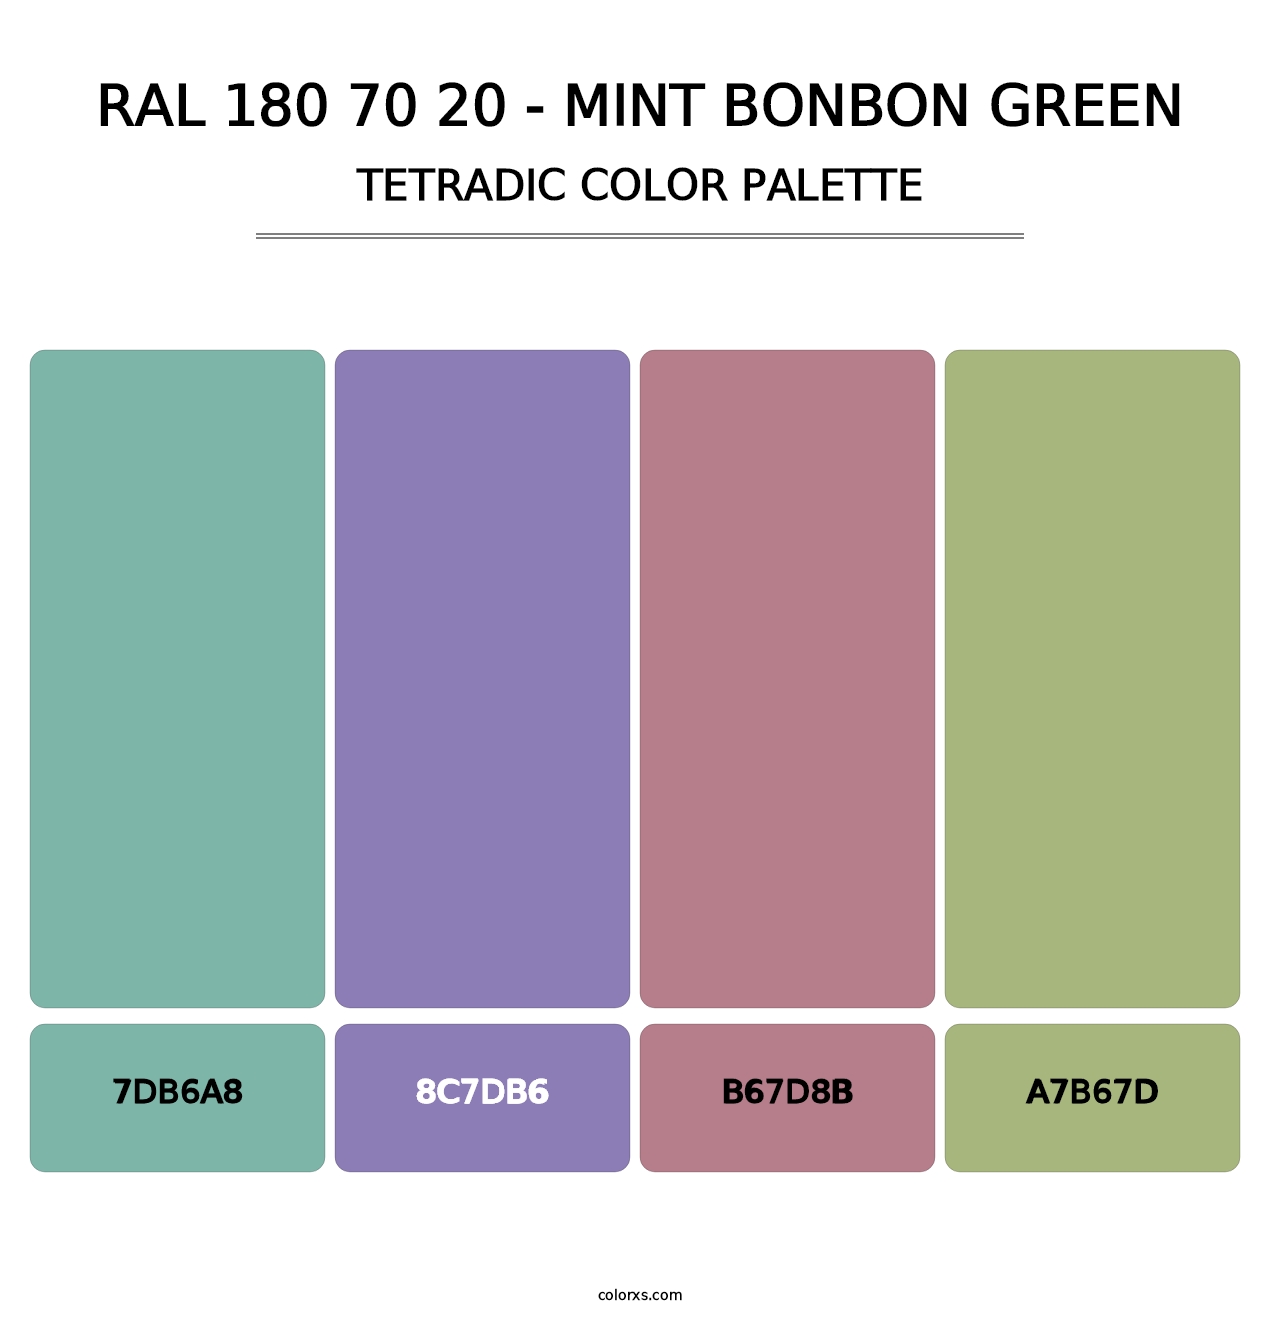 RAL 180 70 20 - Mint Bonbon Green - Tetradic Color Palette